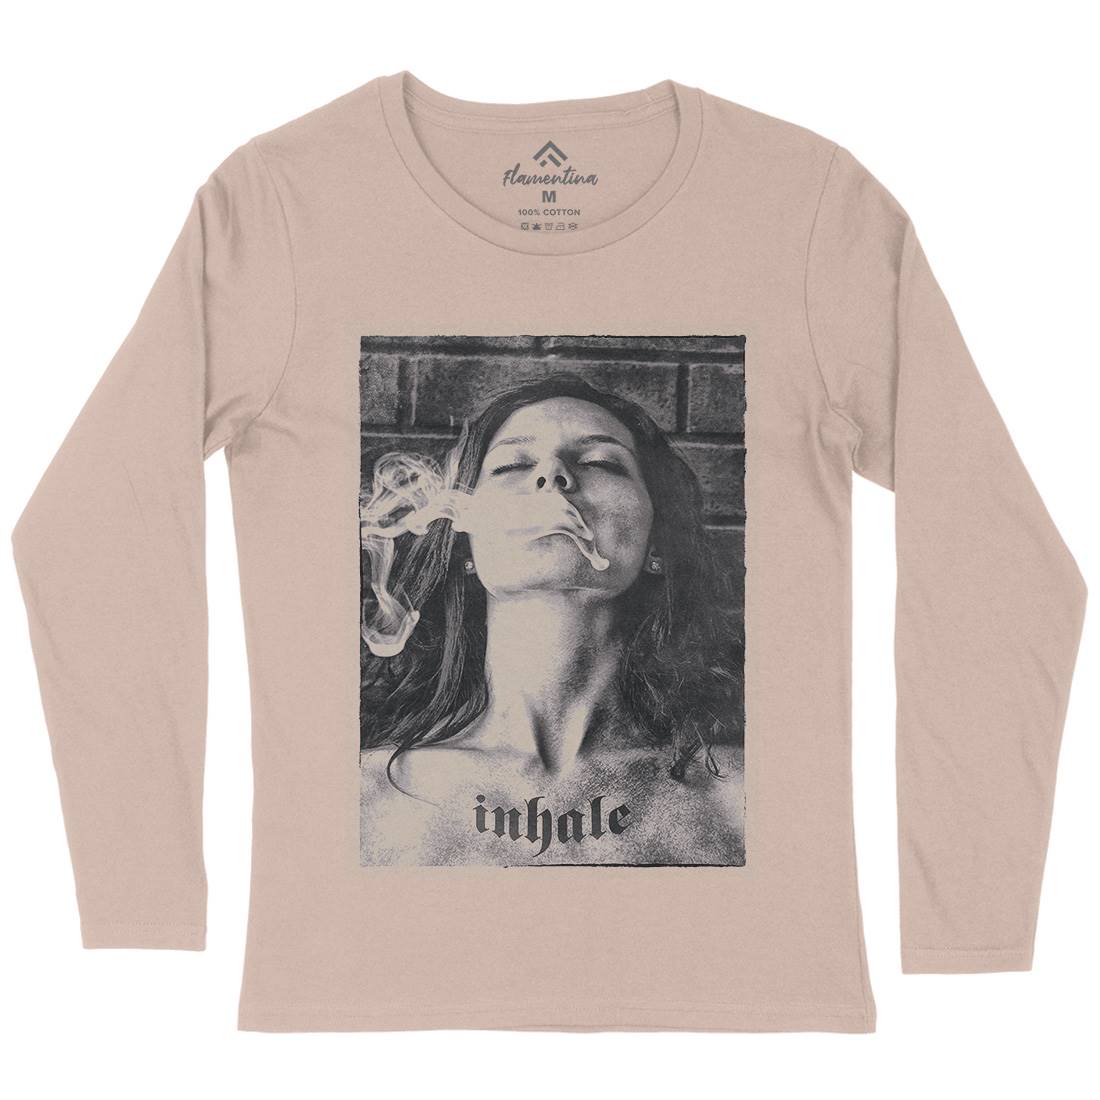 Inhale Womens Long Sleeve T-Shirt Drugs A851